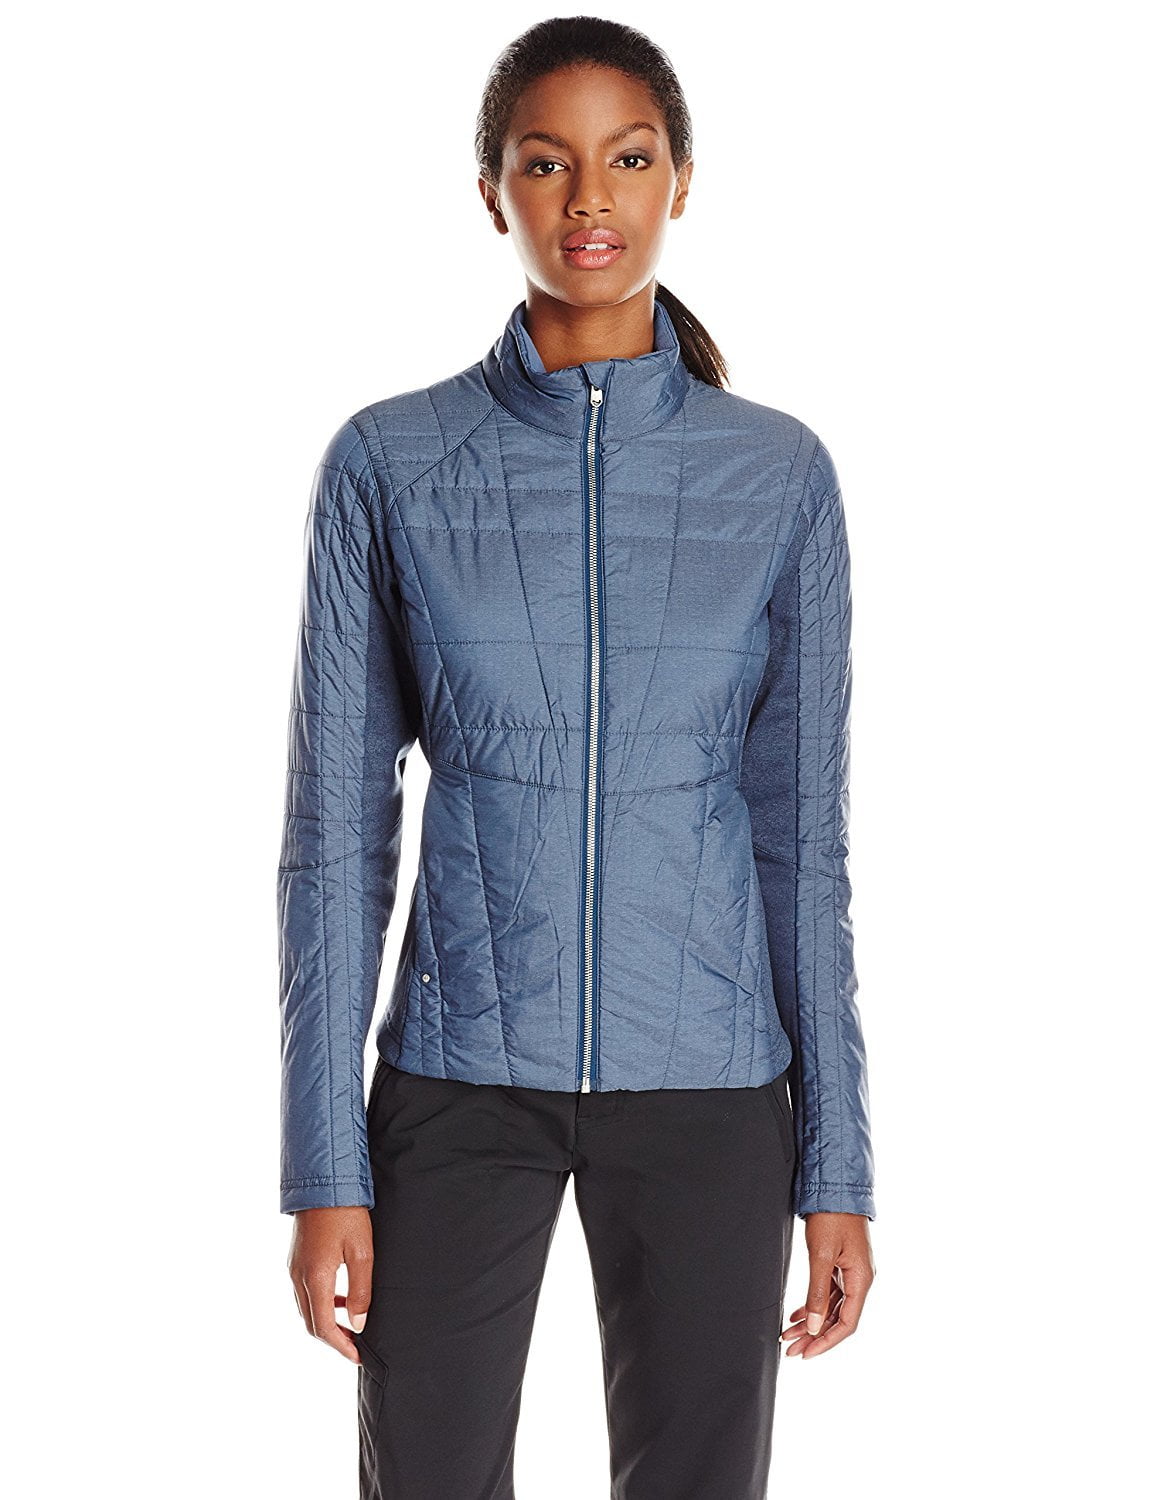 Spyder Women's Lucid Jacket, Color Options - Walmart.com